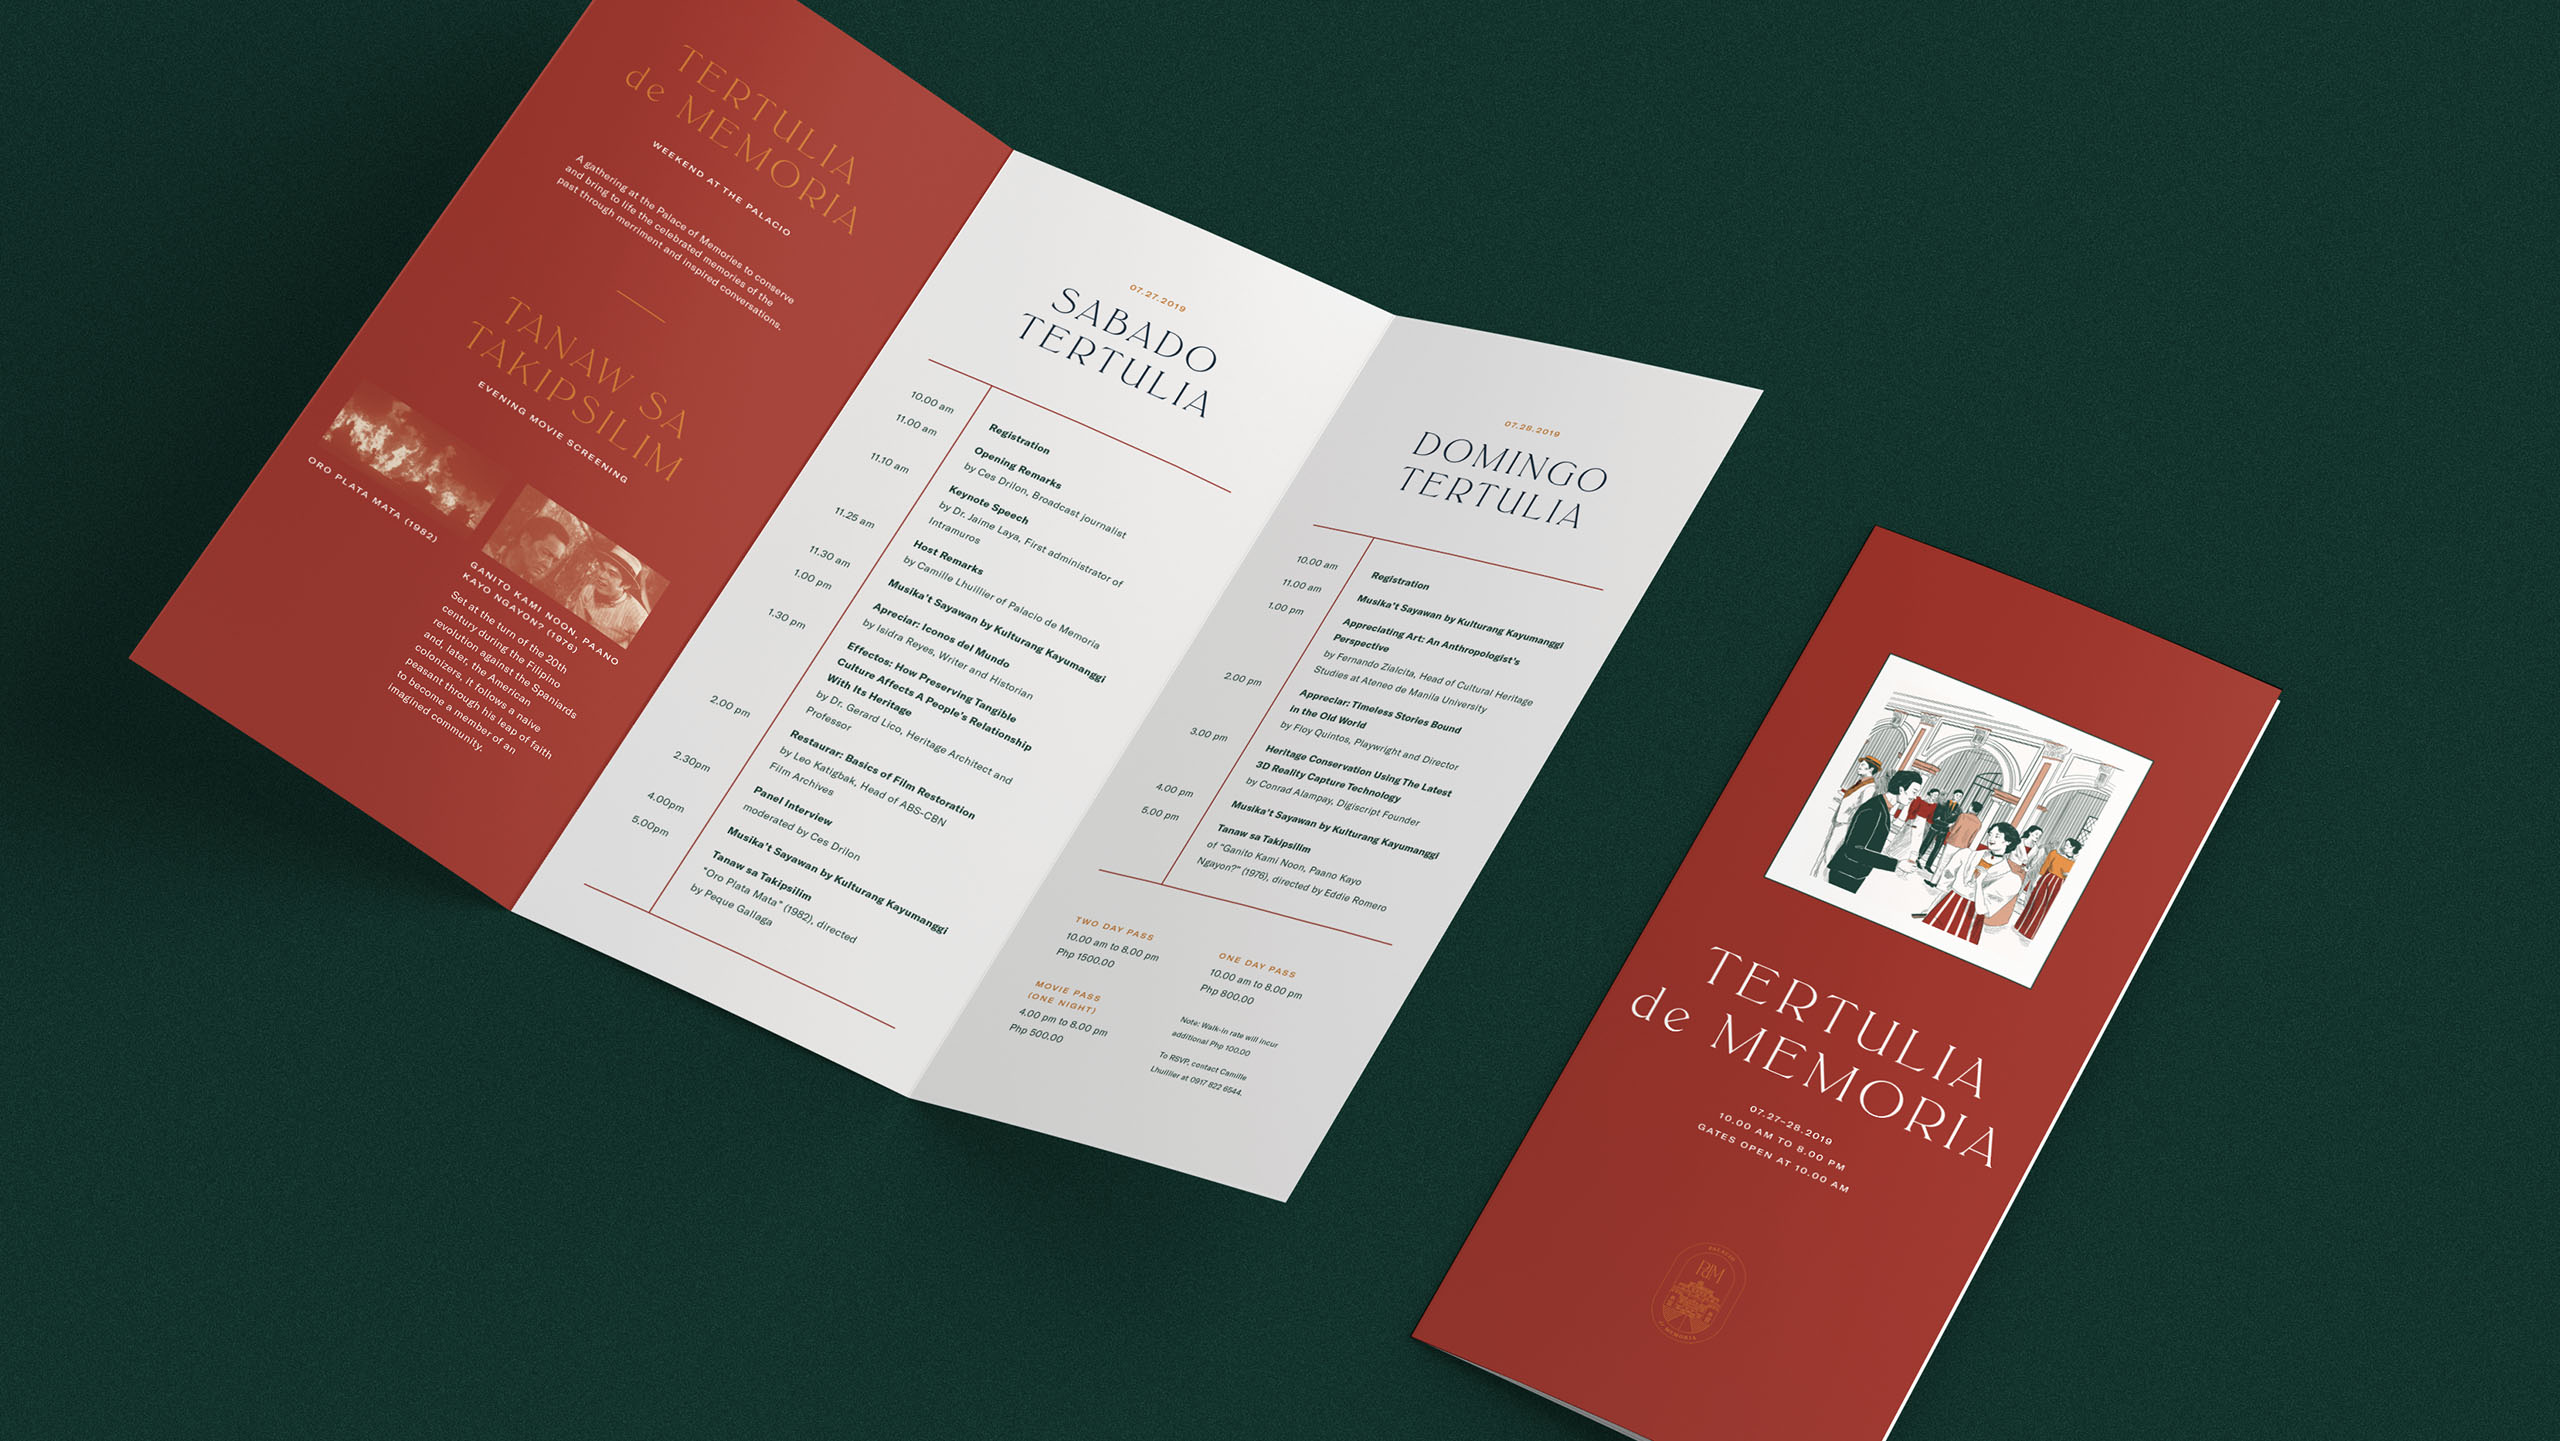 Branded event brochure design and layout for culture and events venue Palacio de Memoria